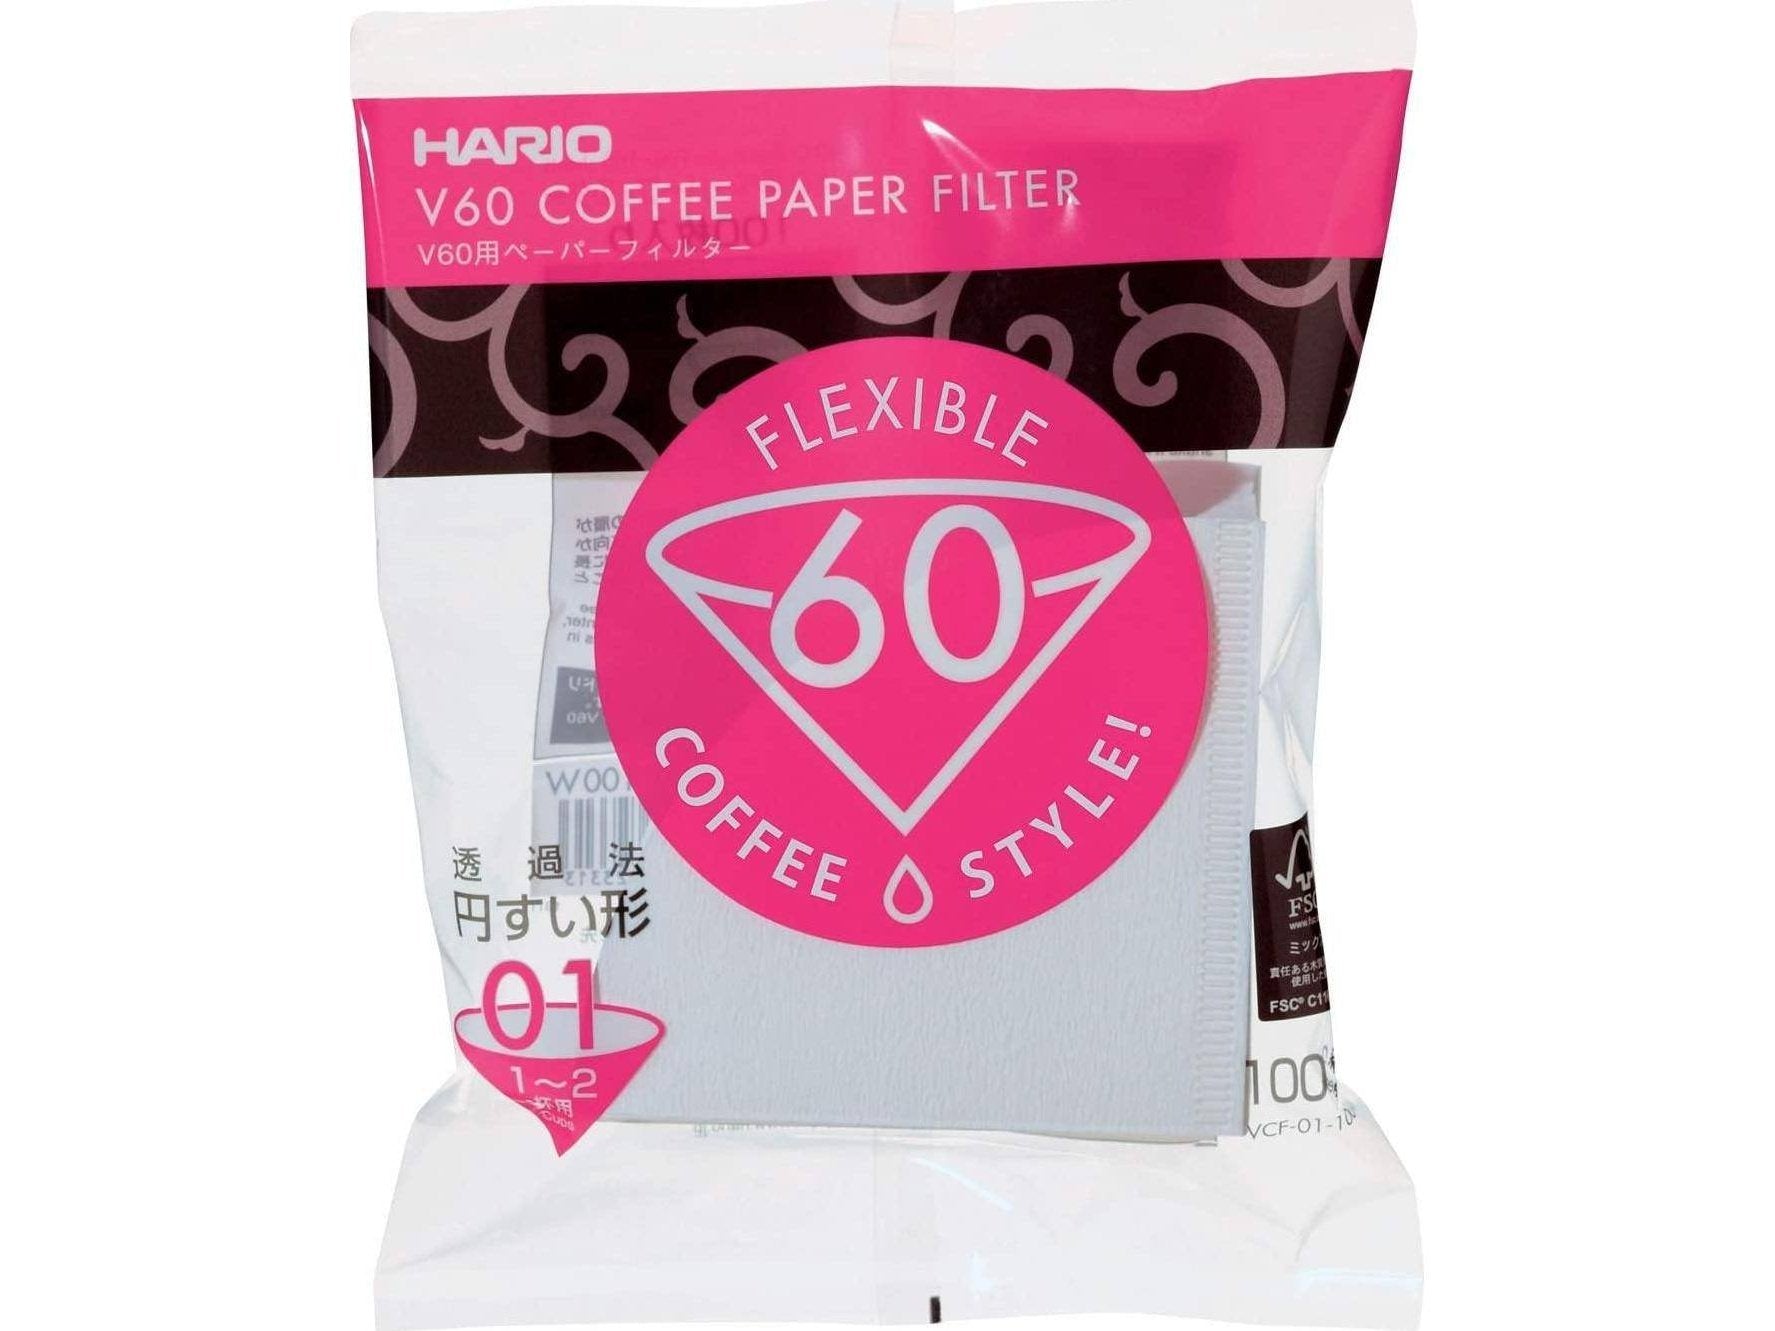 HARIO Coffee Paper Filter Pcs